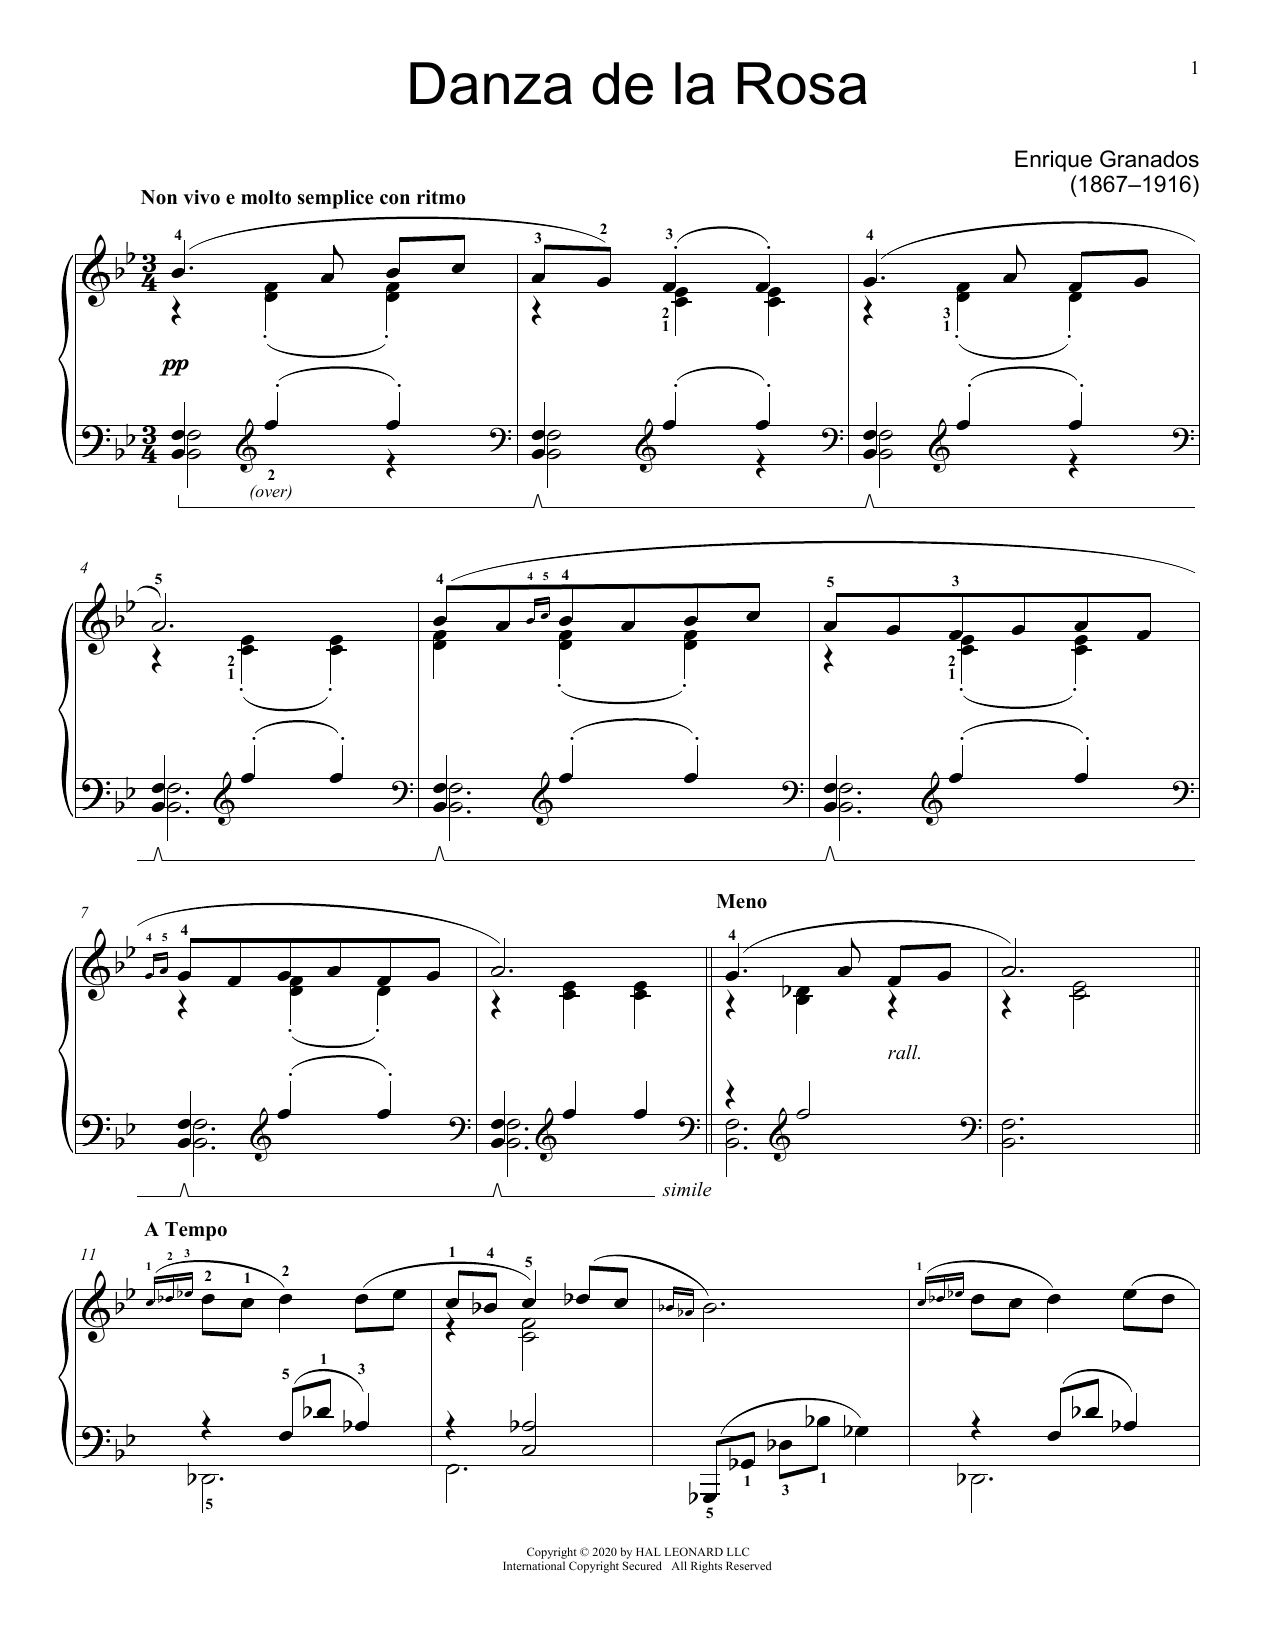 Enrique Granados Danza de la Rosa Sheet Music Notes & Chords for Educational Piano - Download or Print PDF